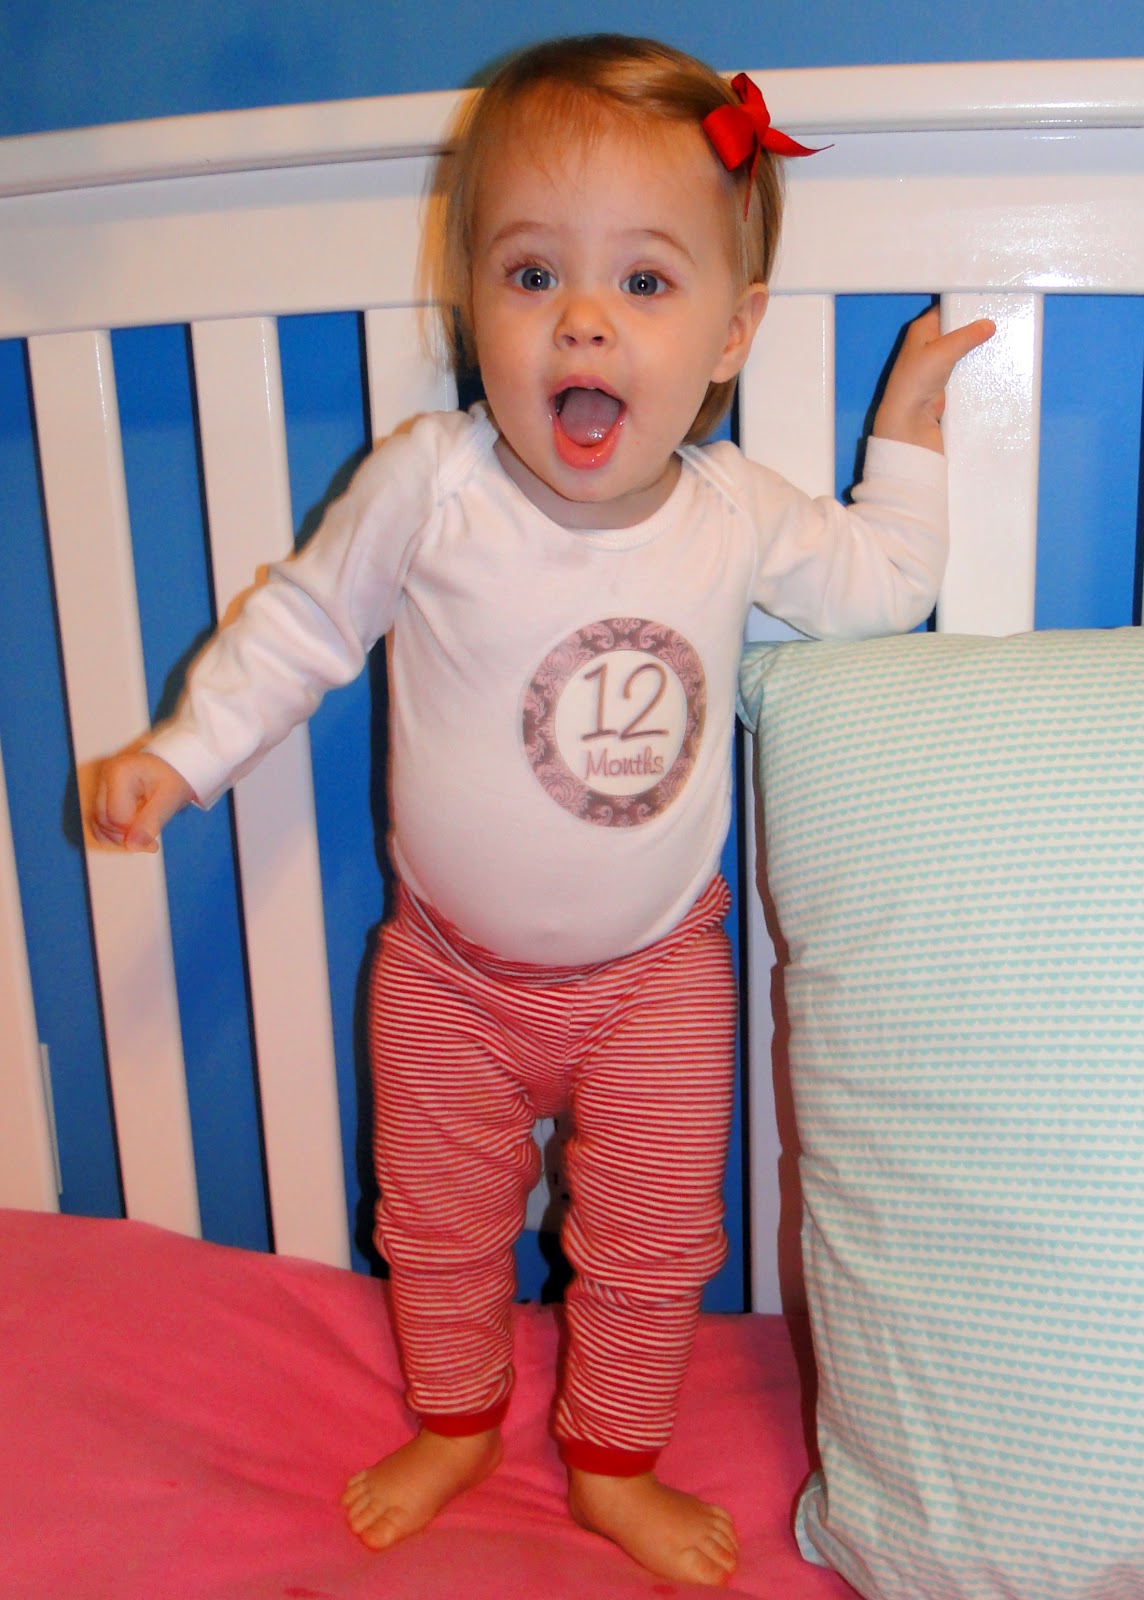 Brittlynn - 12 Months Old! - The Journey of Parenthood...